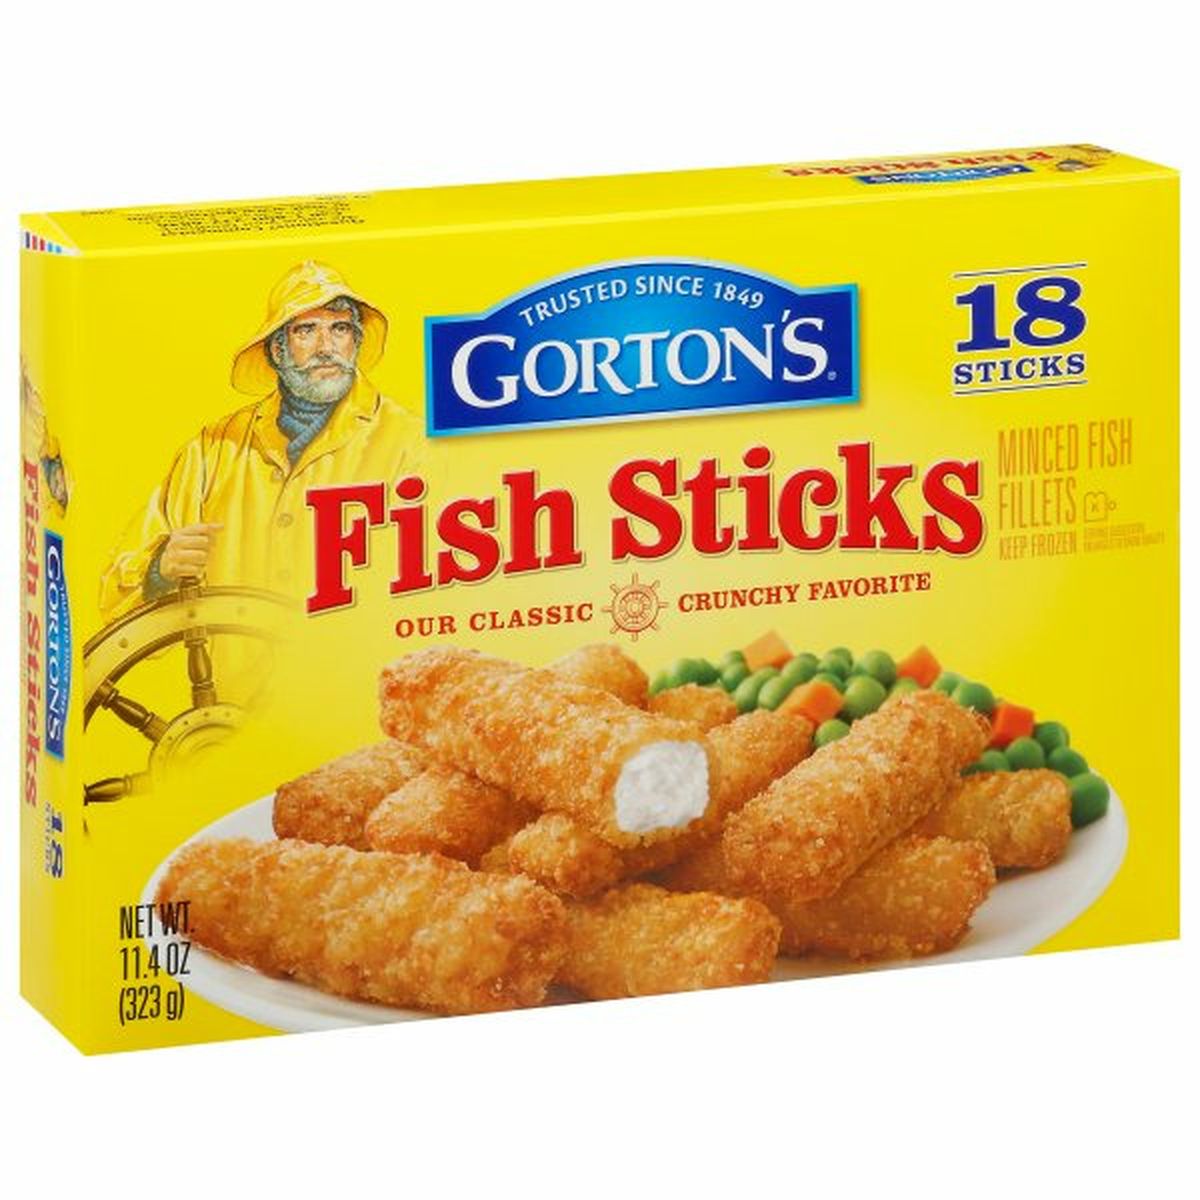 Calories in Gorton's Fish Sticks